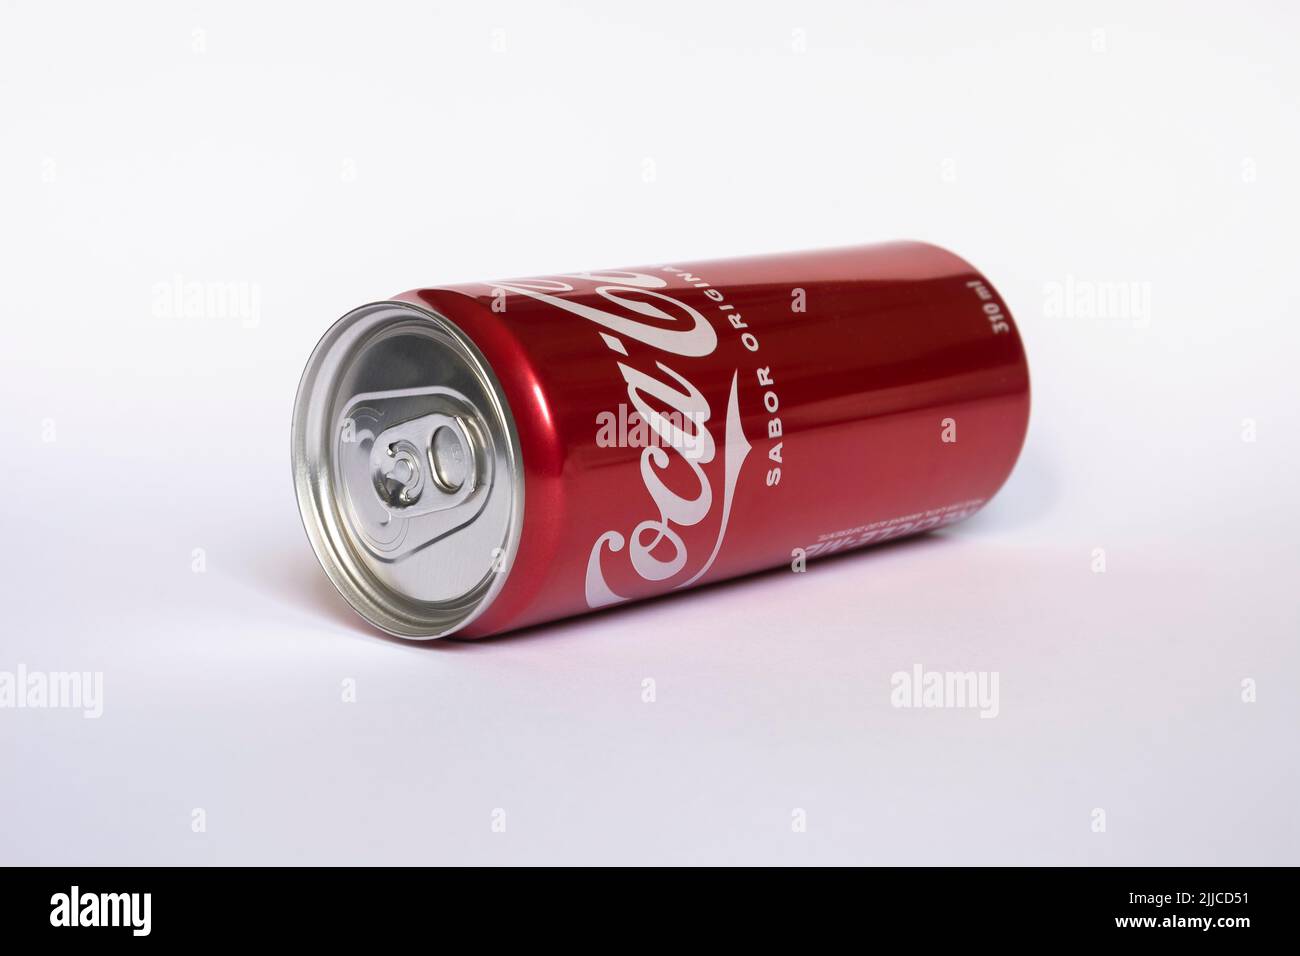 Coca cola brazil fotografías e imágenes de alta resolución - Alamy